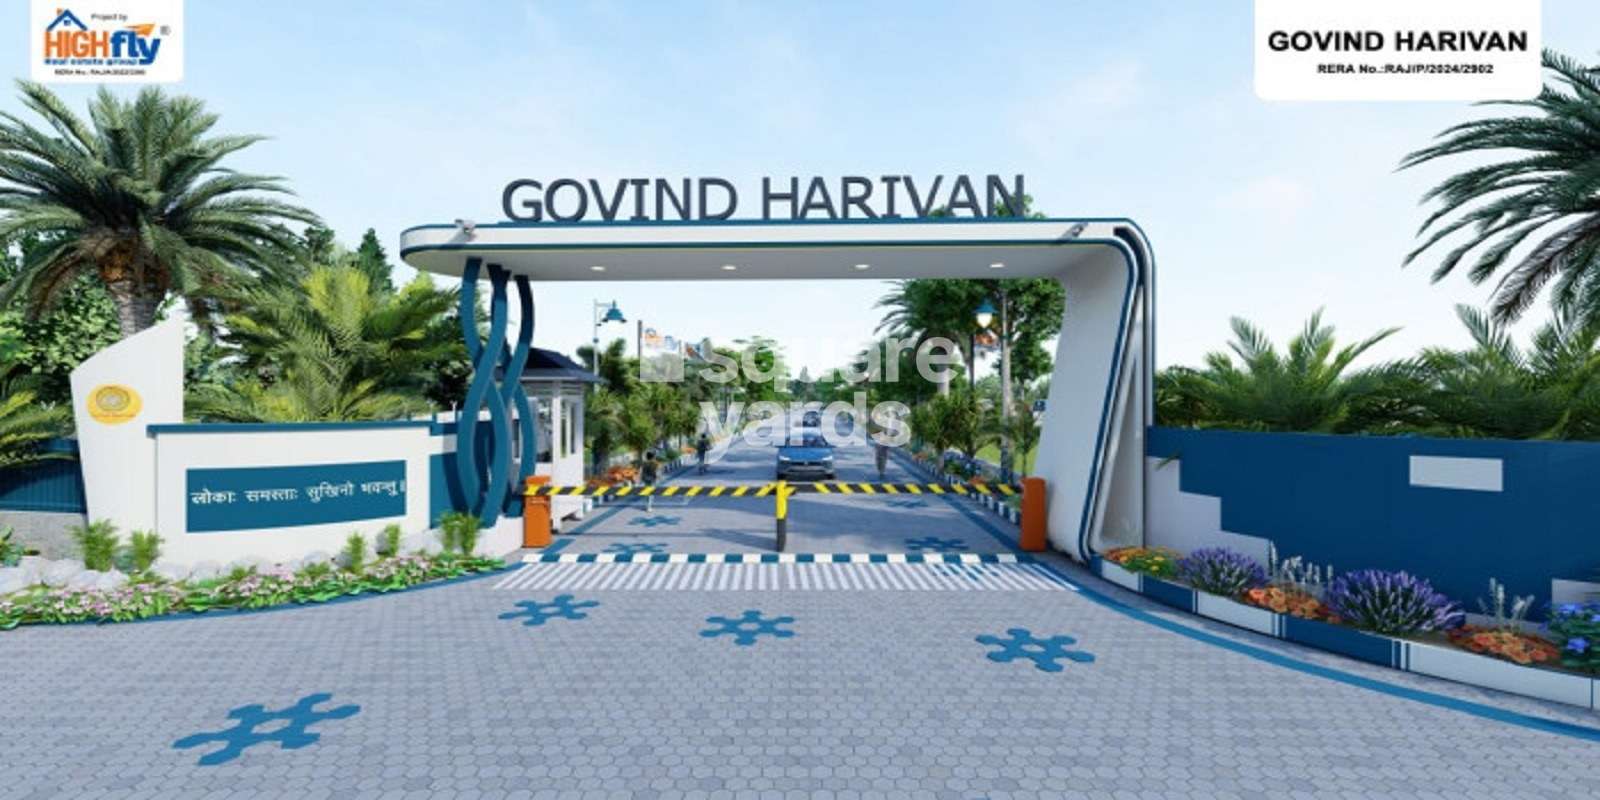 High Govind Harivan Cover Image